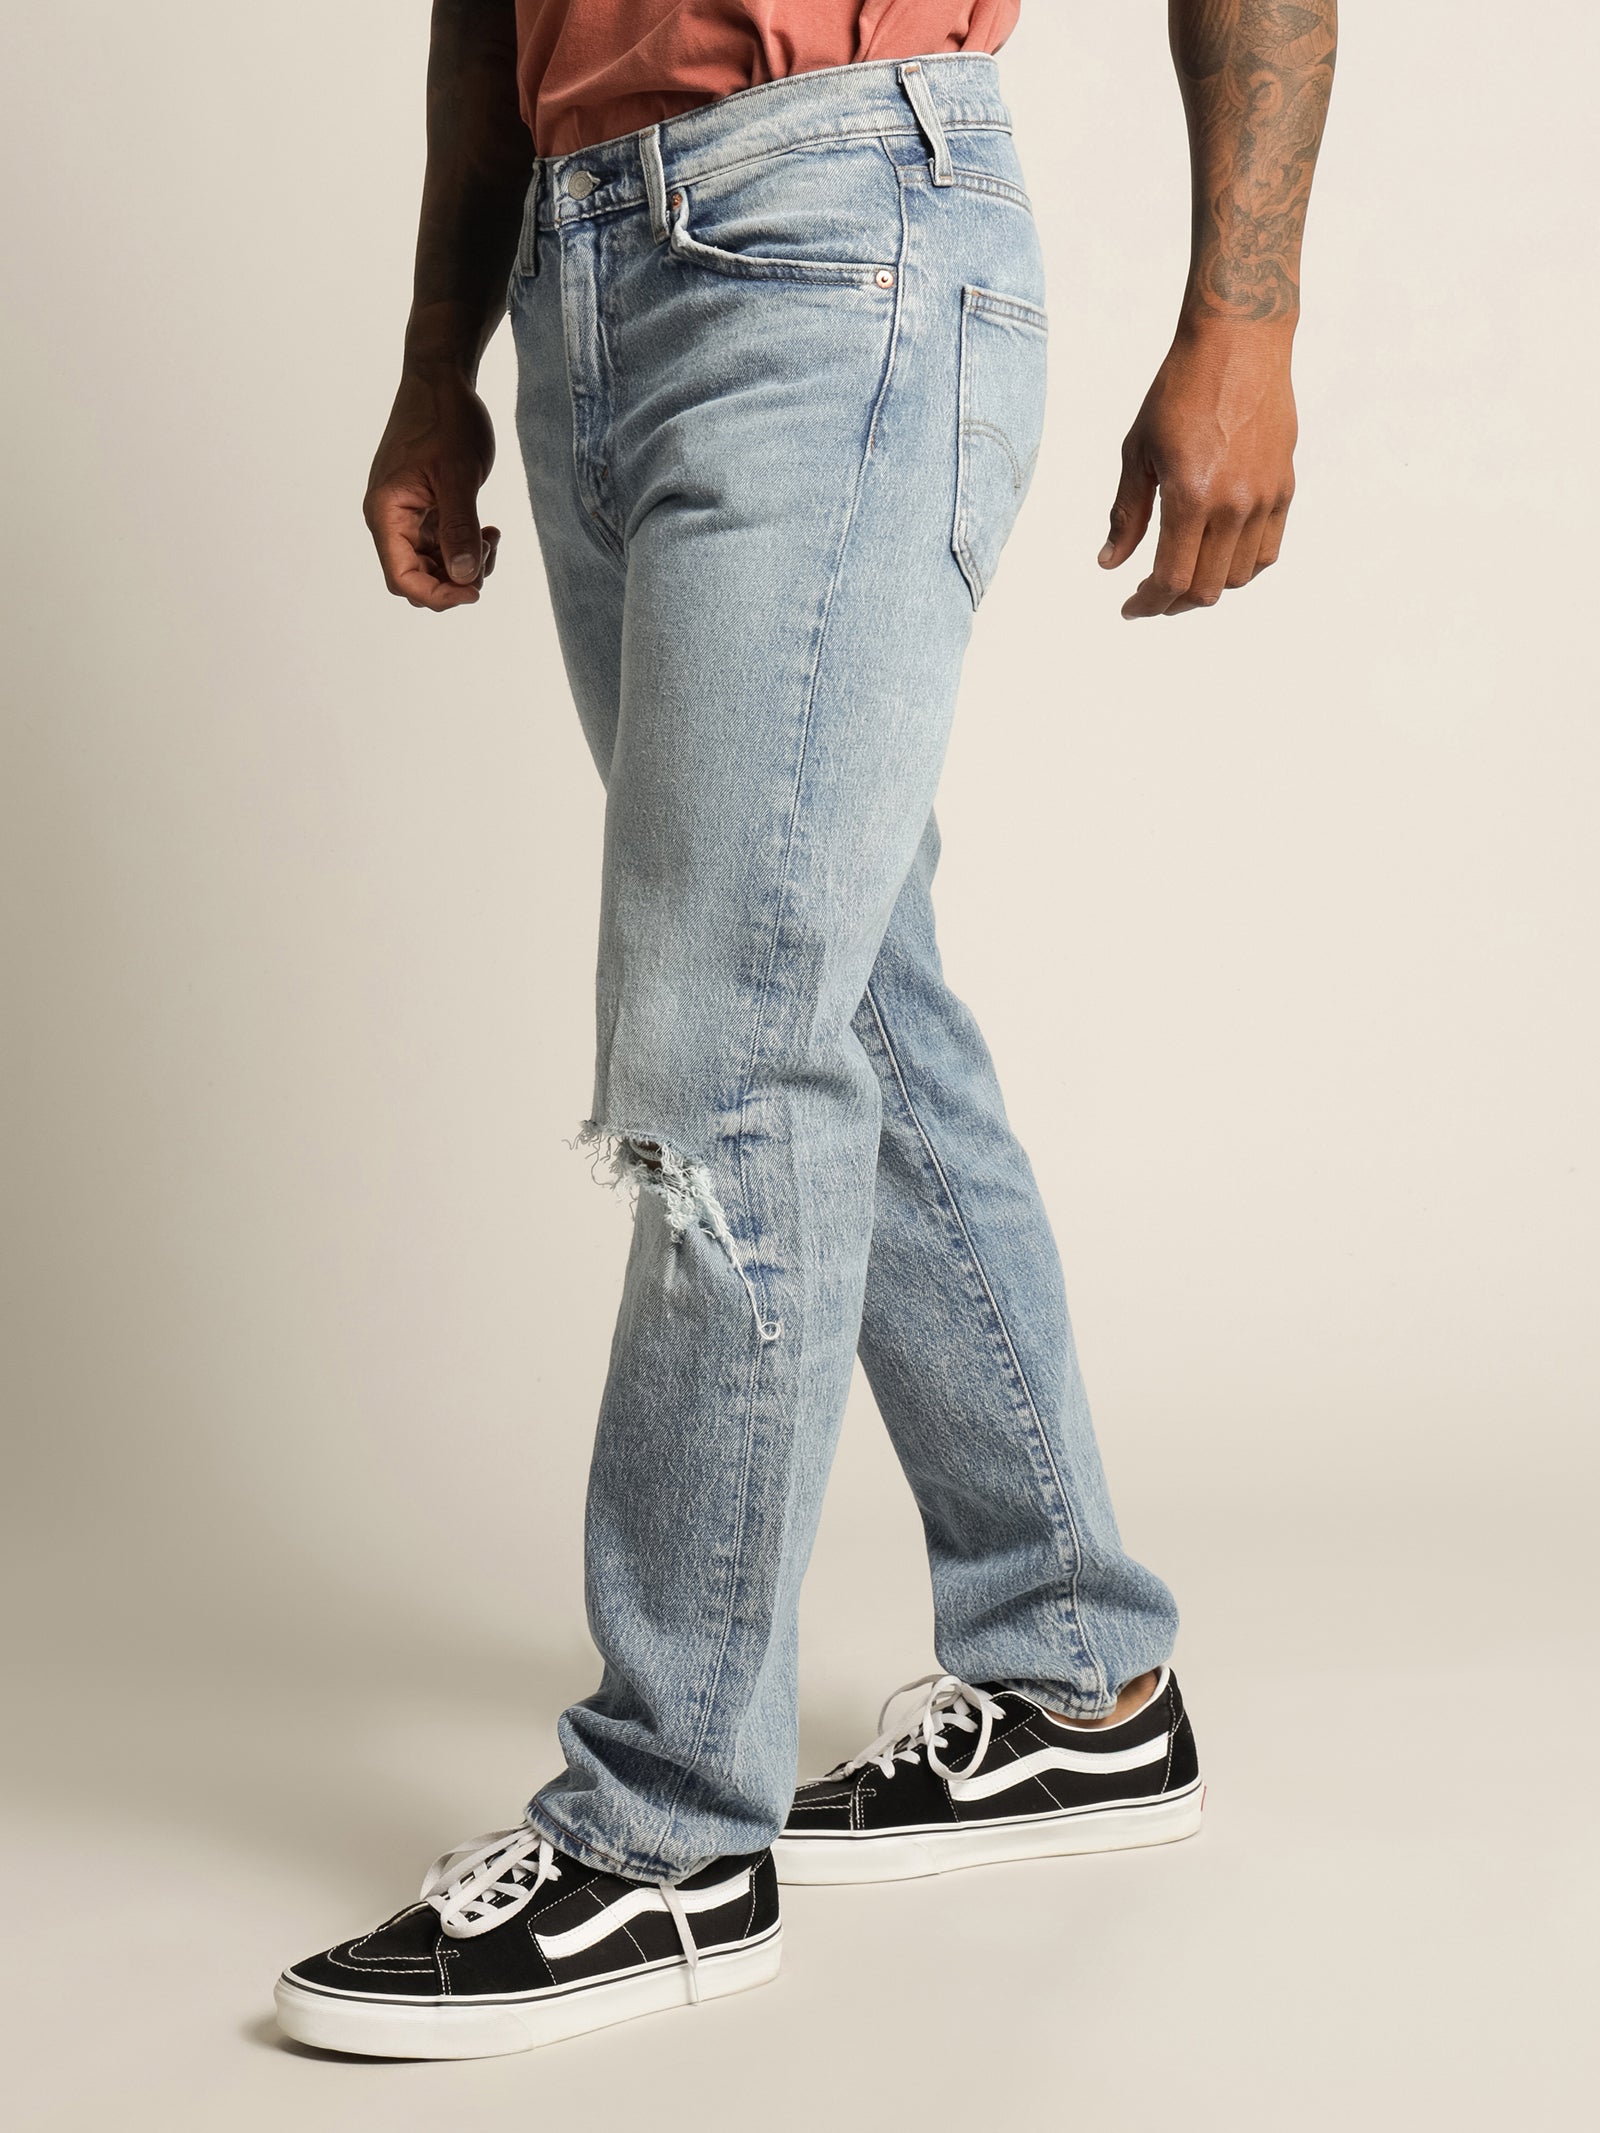 So High Slim Fit Jeans in California Star DX - Glue Store